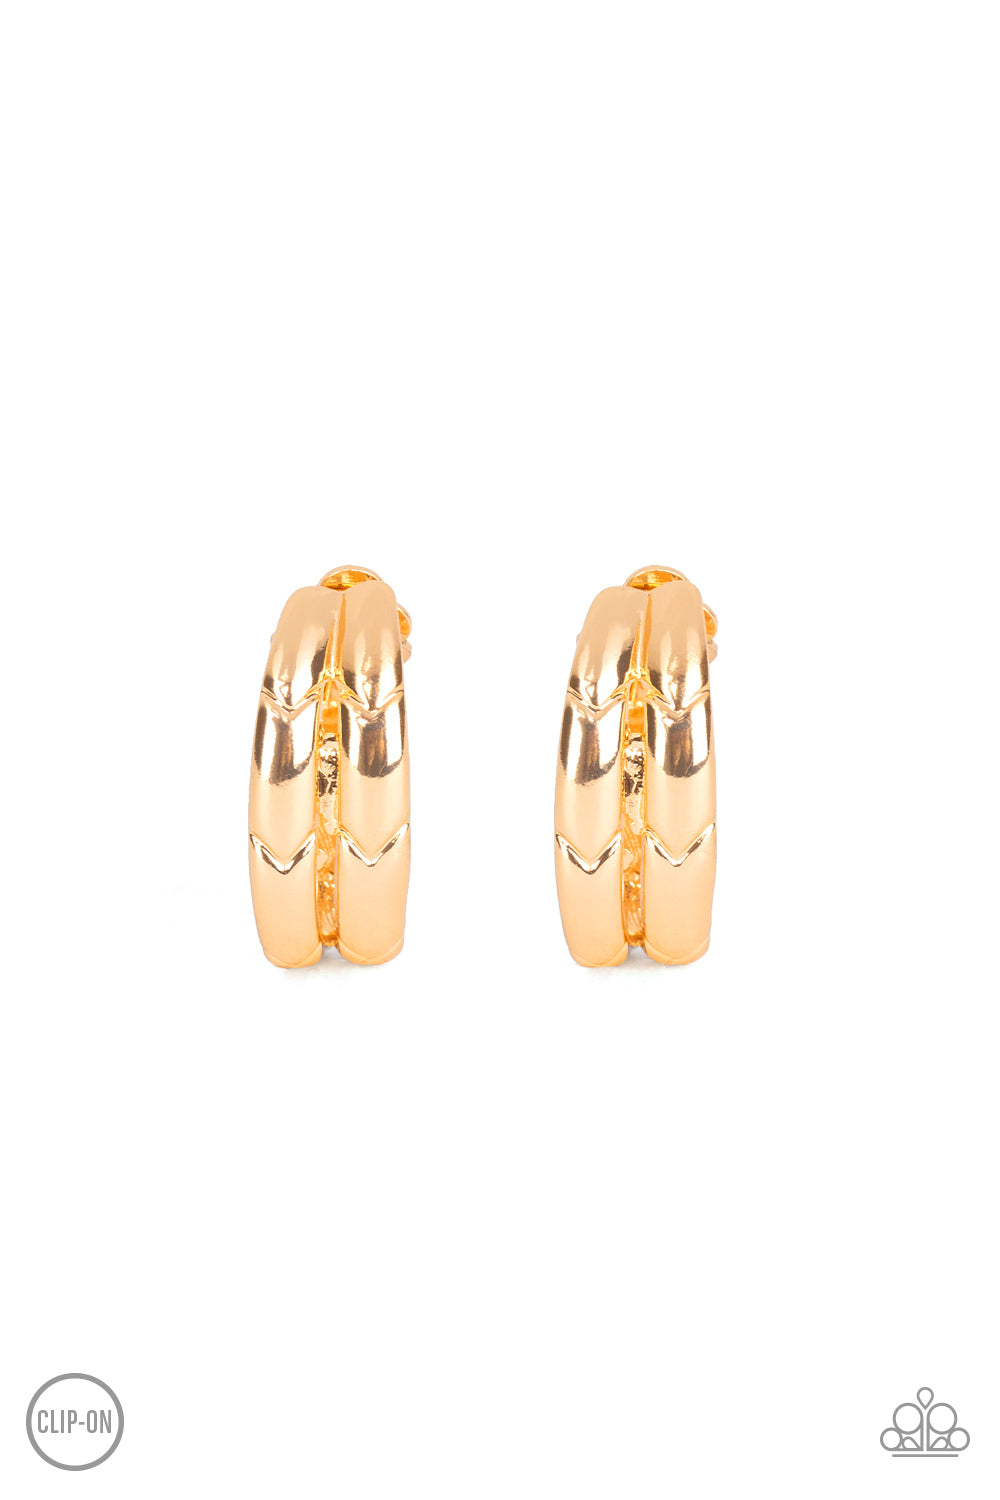 Candlelight Cruise - gold - Paparazzi earrings